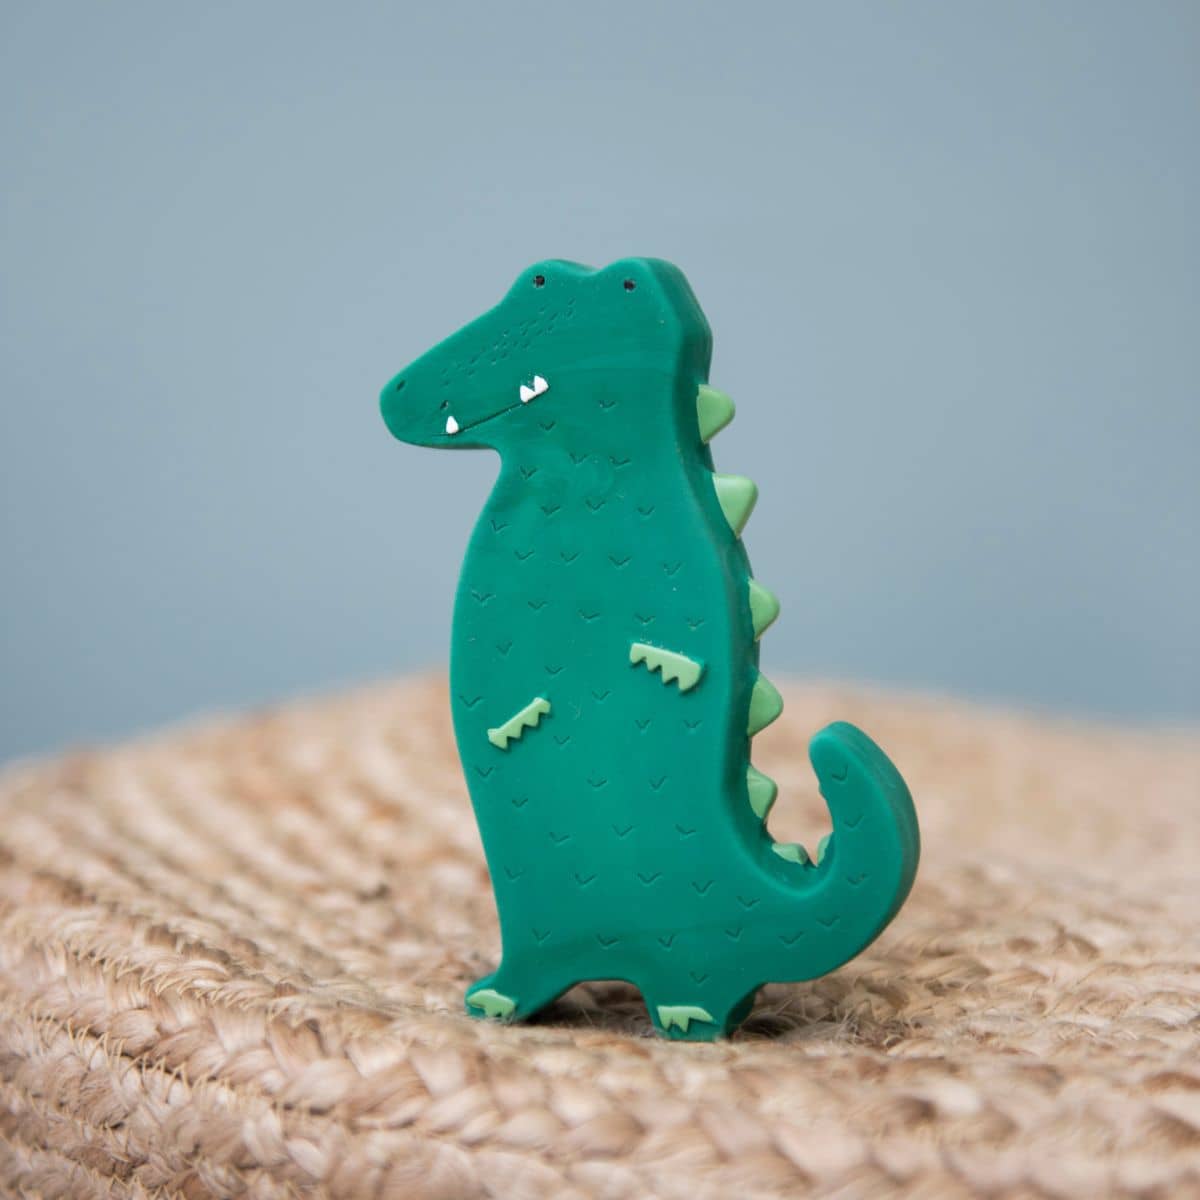 Trixie Natural Rubber Toy - Mr. Crocodile